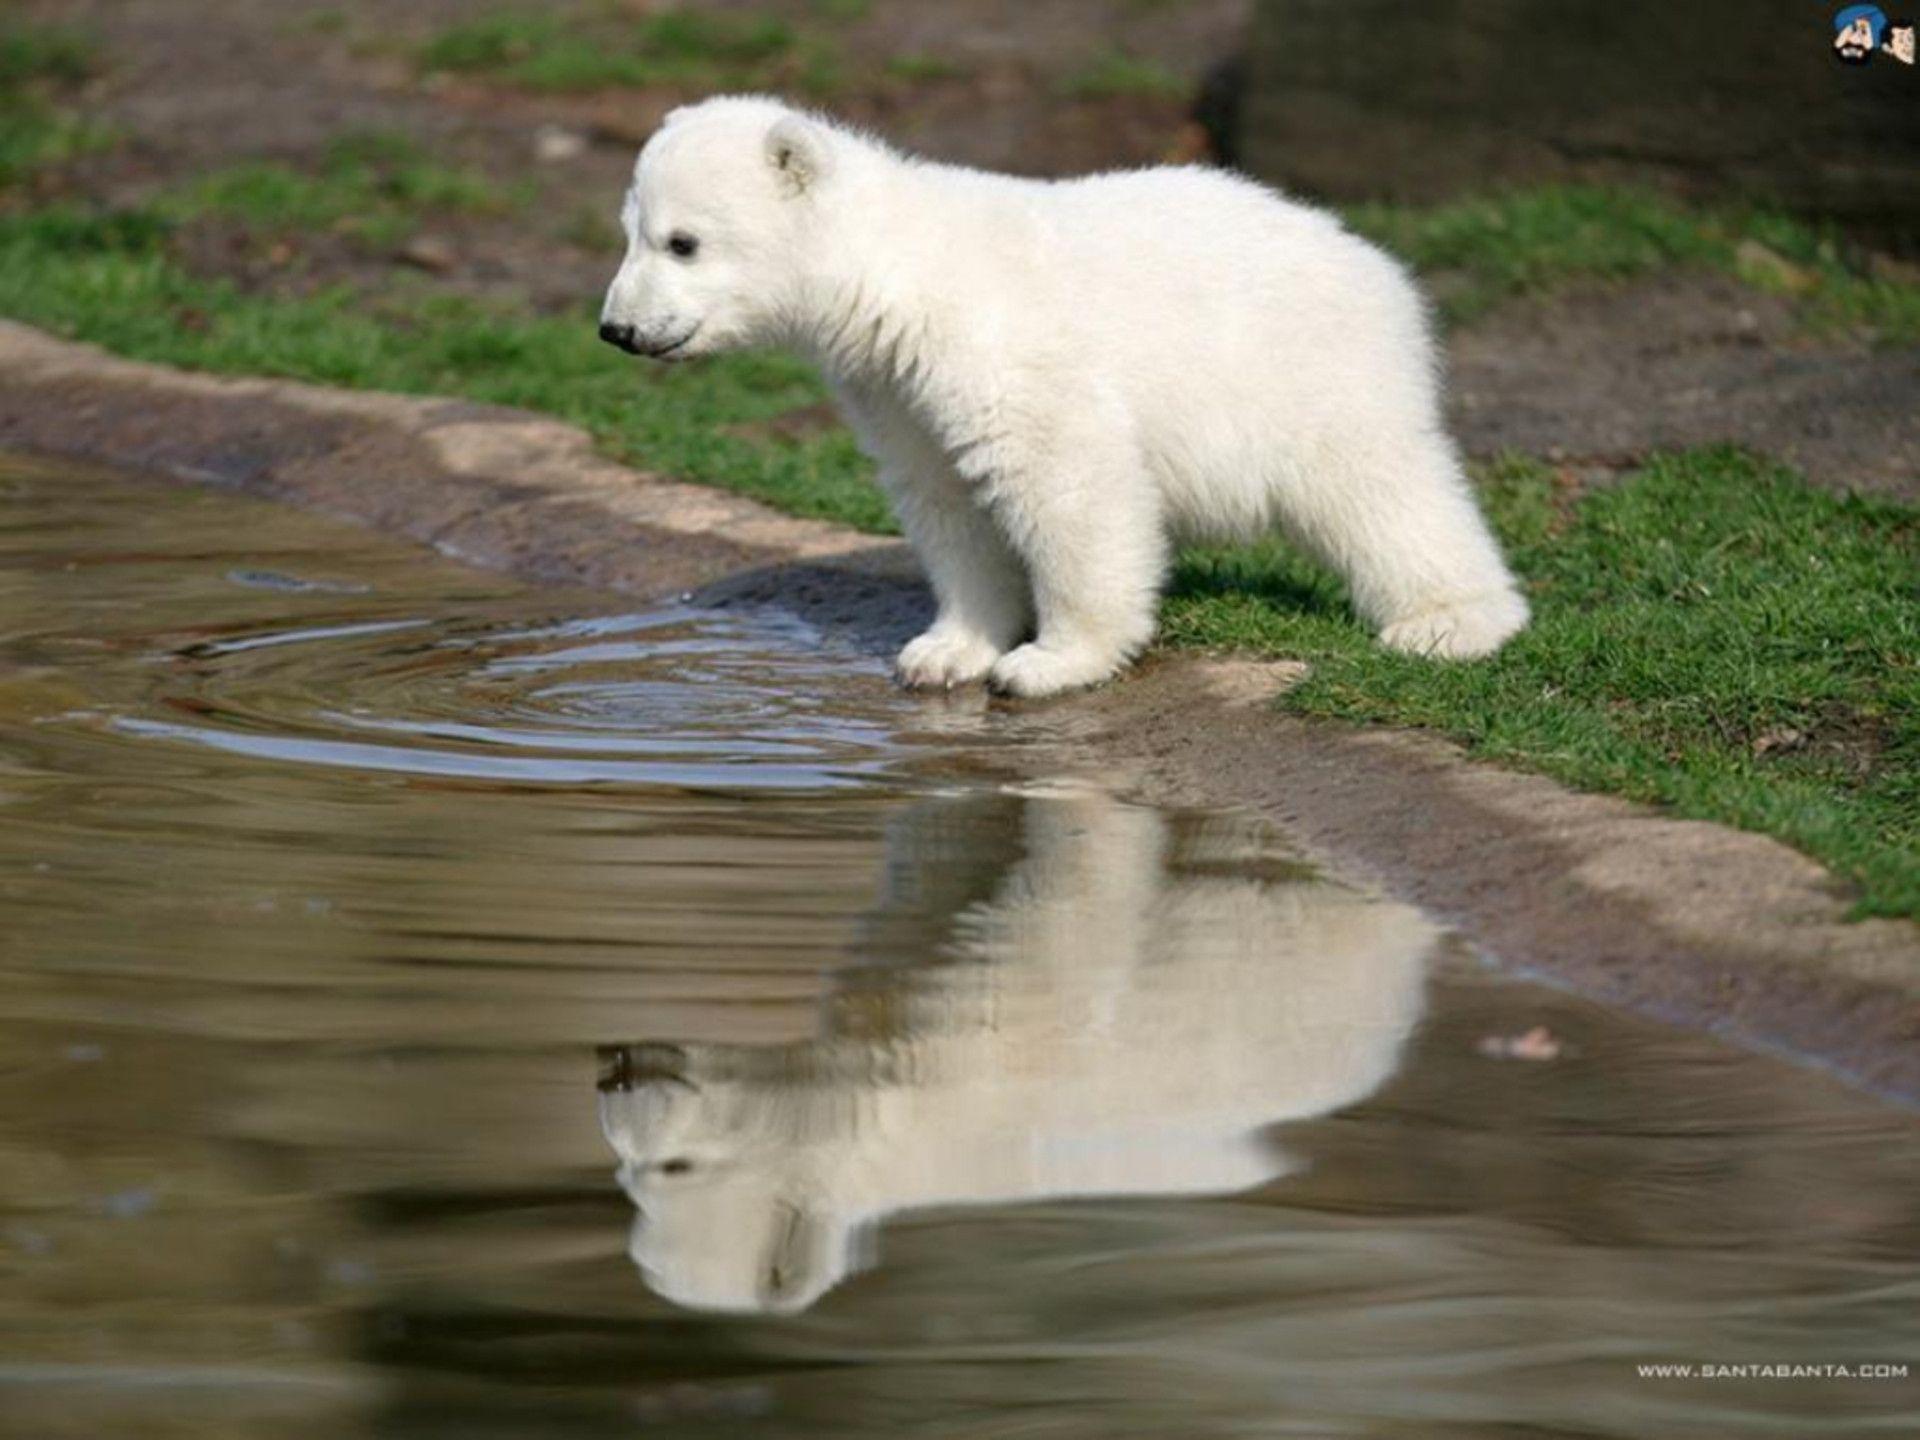 Baby Polar Bears